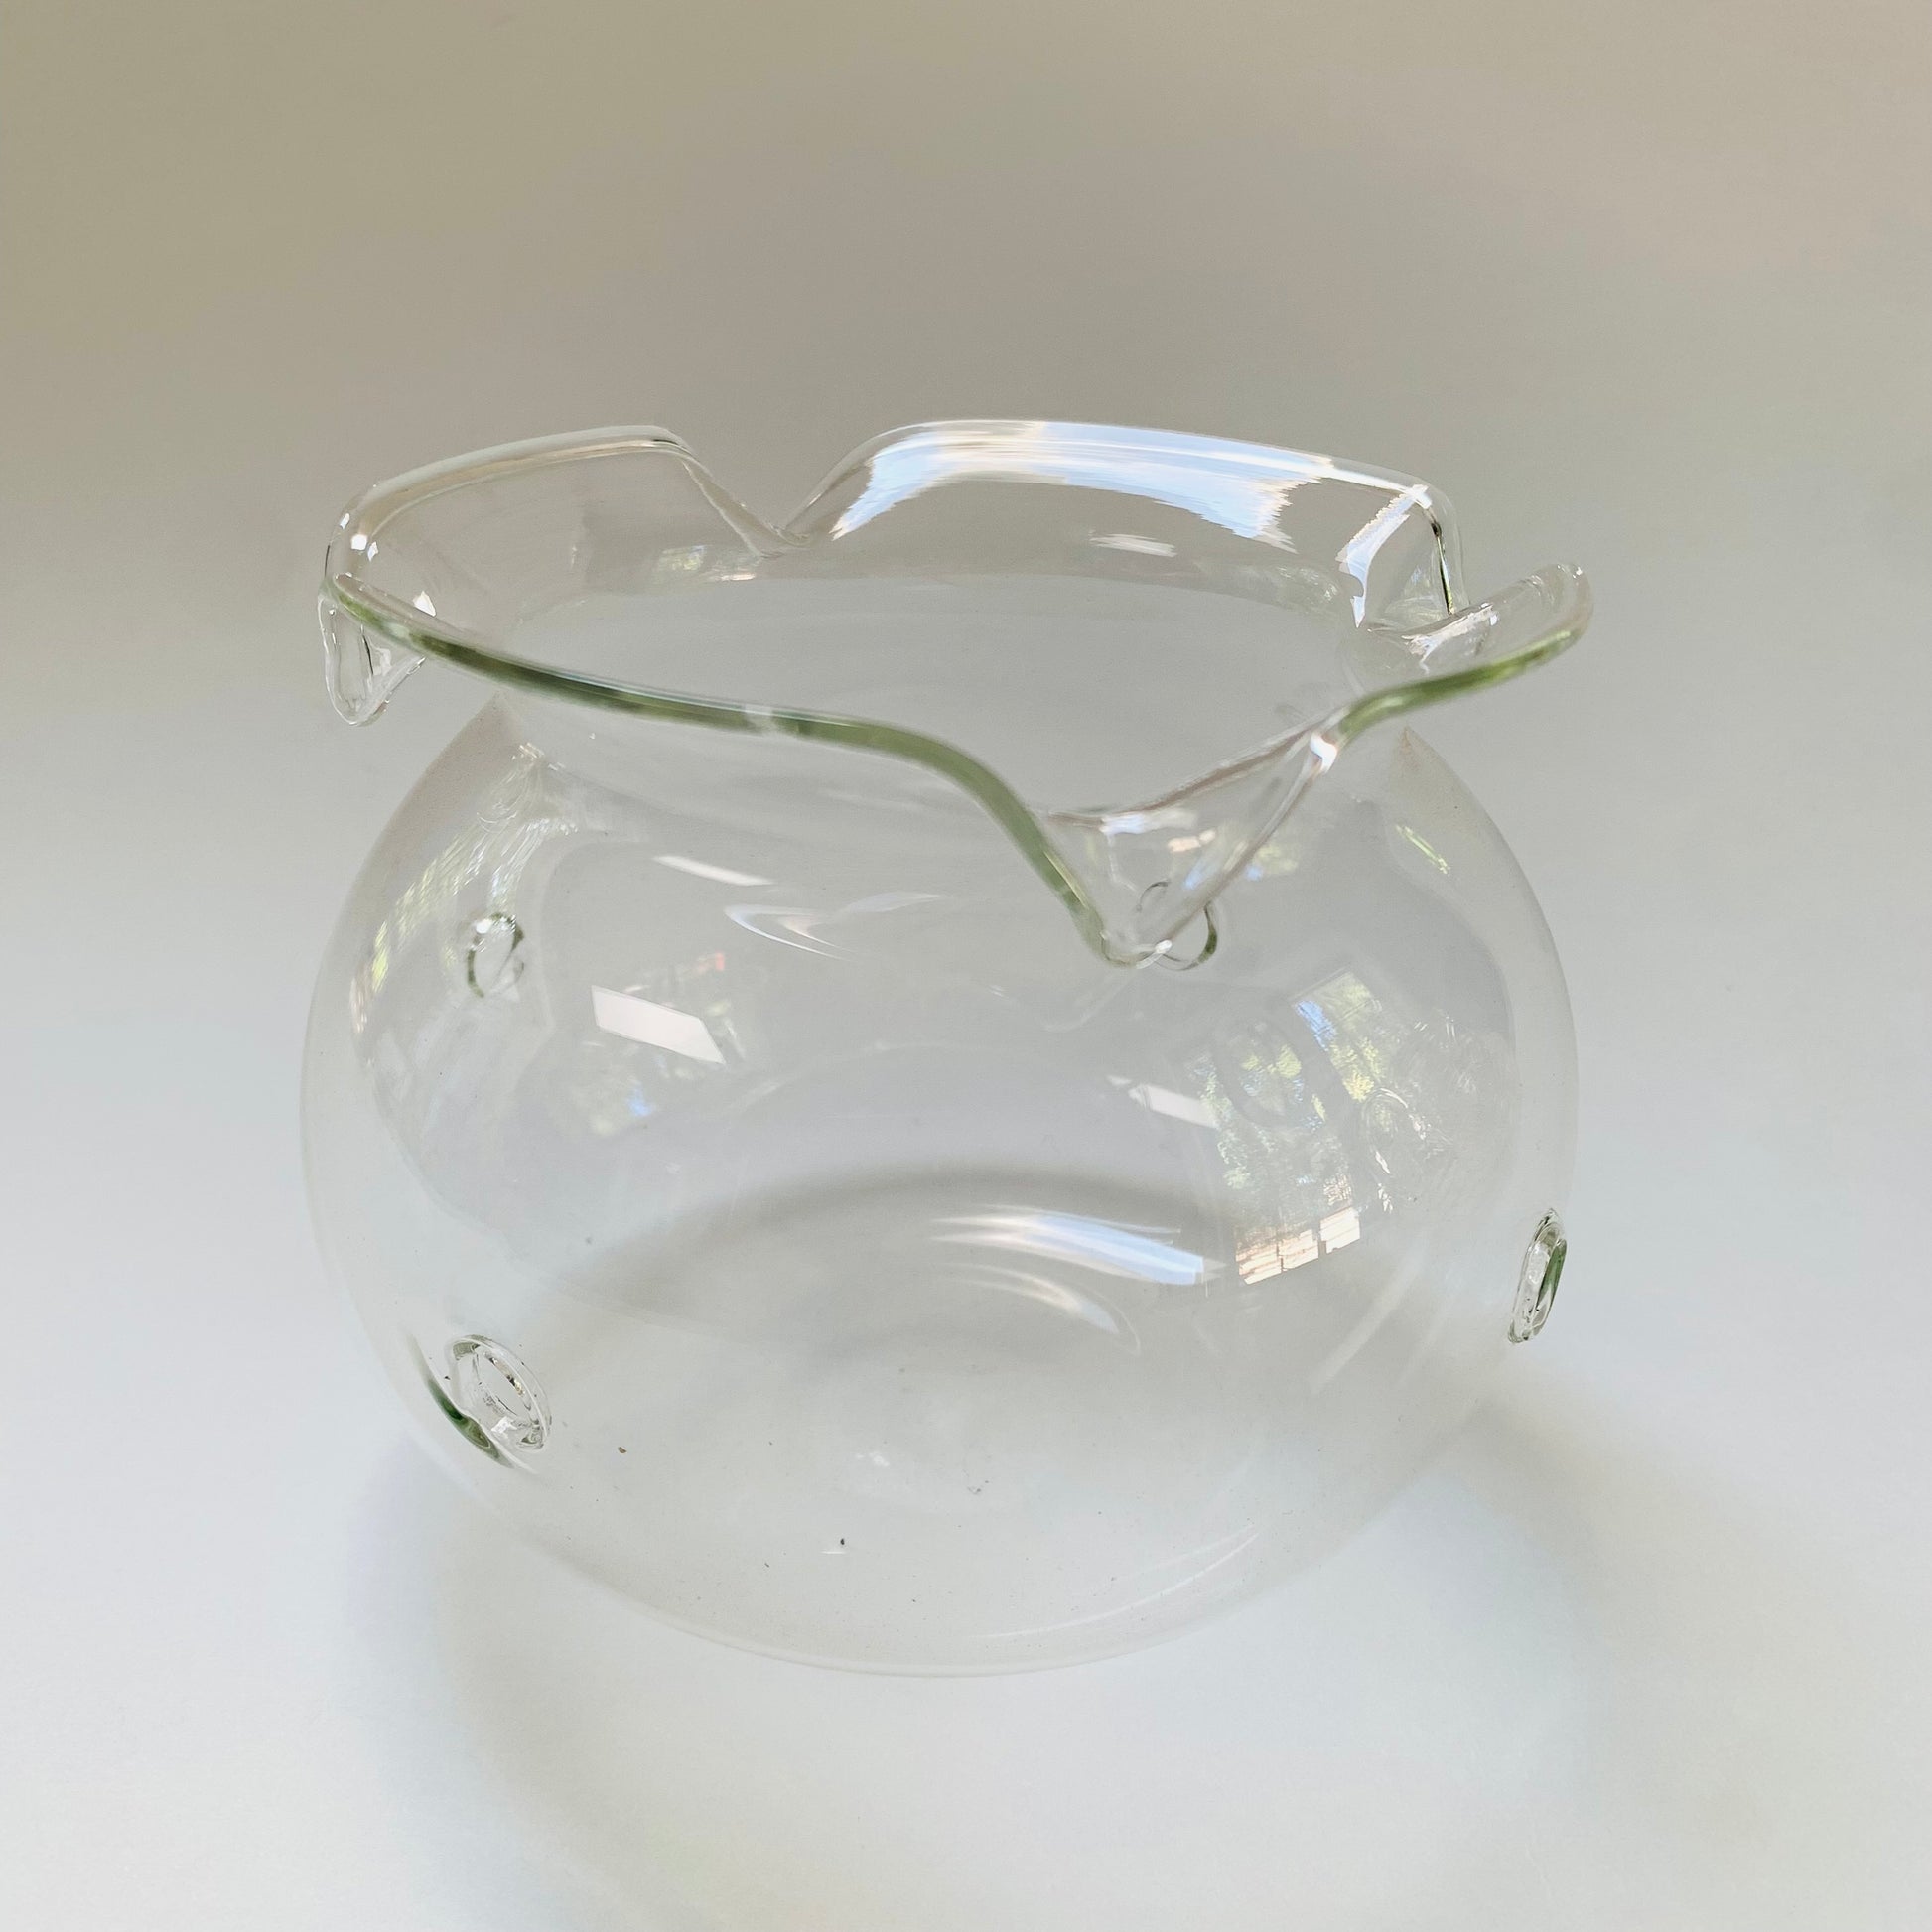 Blown Glass Teapot with Warmer - Gold Garland